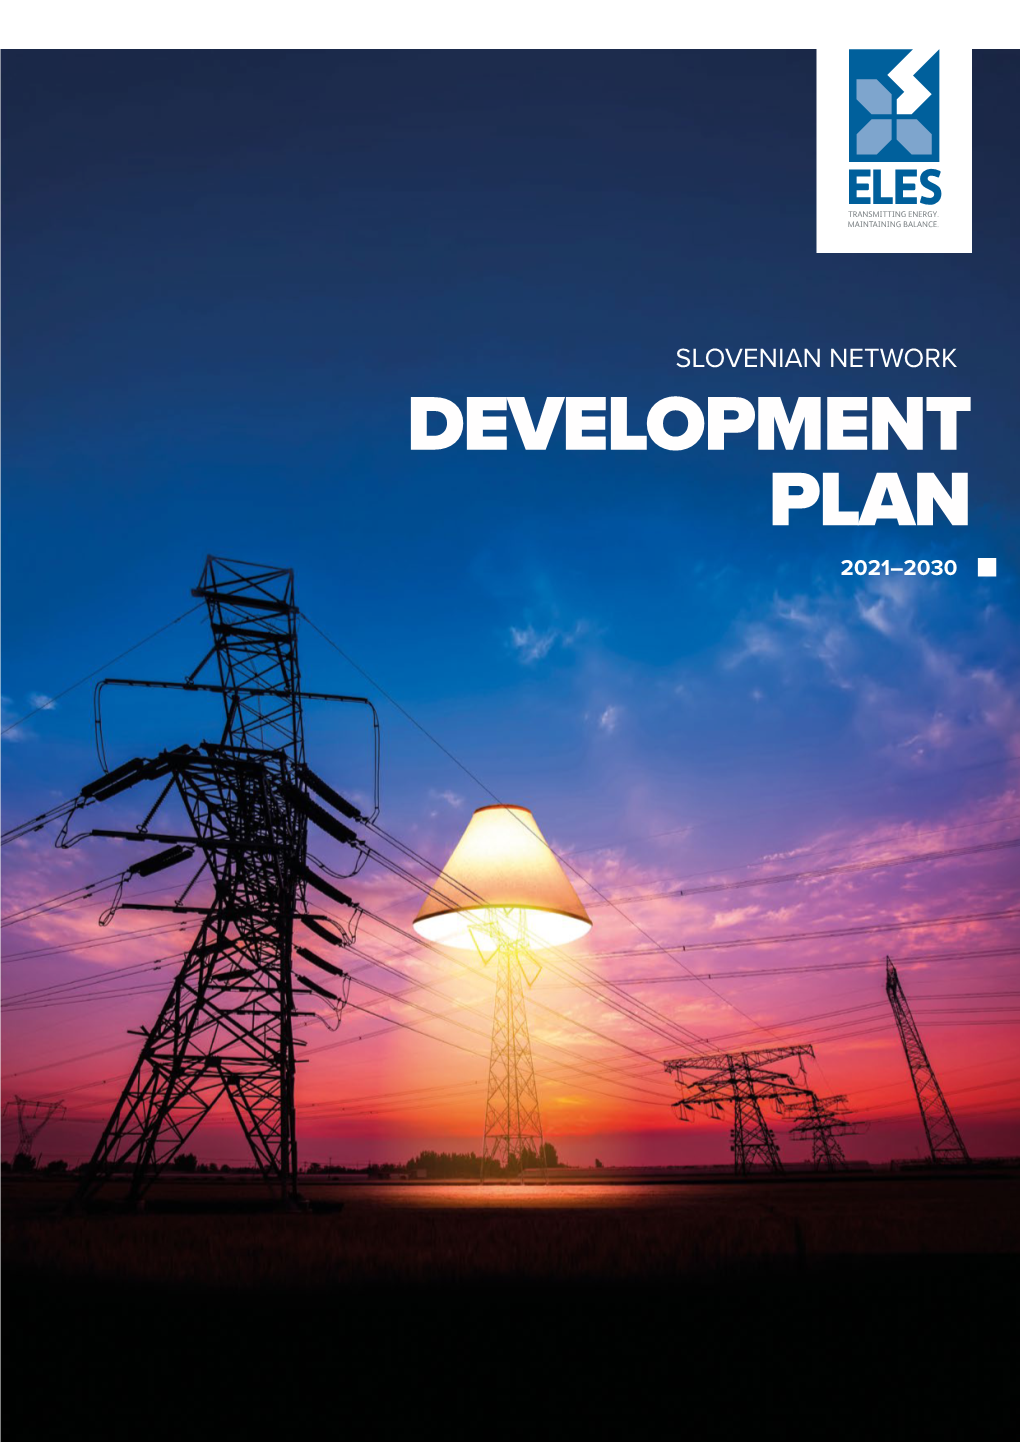 Network Development Plan 2021-2030